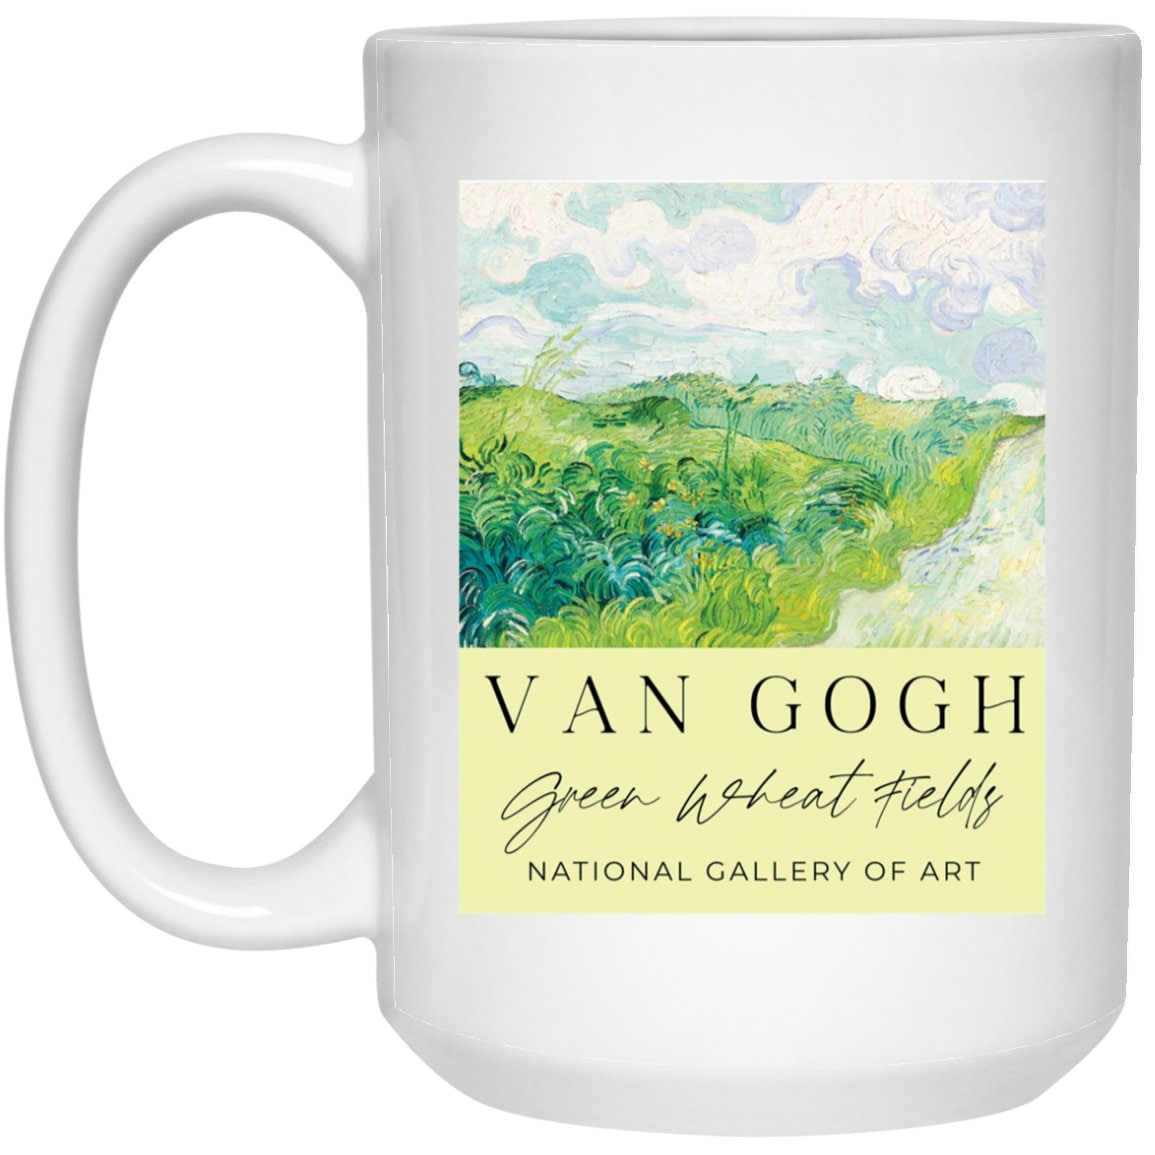 Van Gogh Vase Mug Green Wheat Fields Coffee Cup